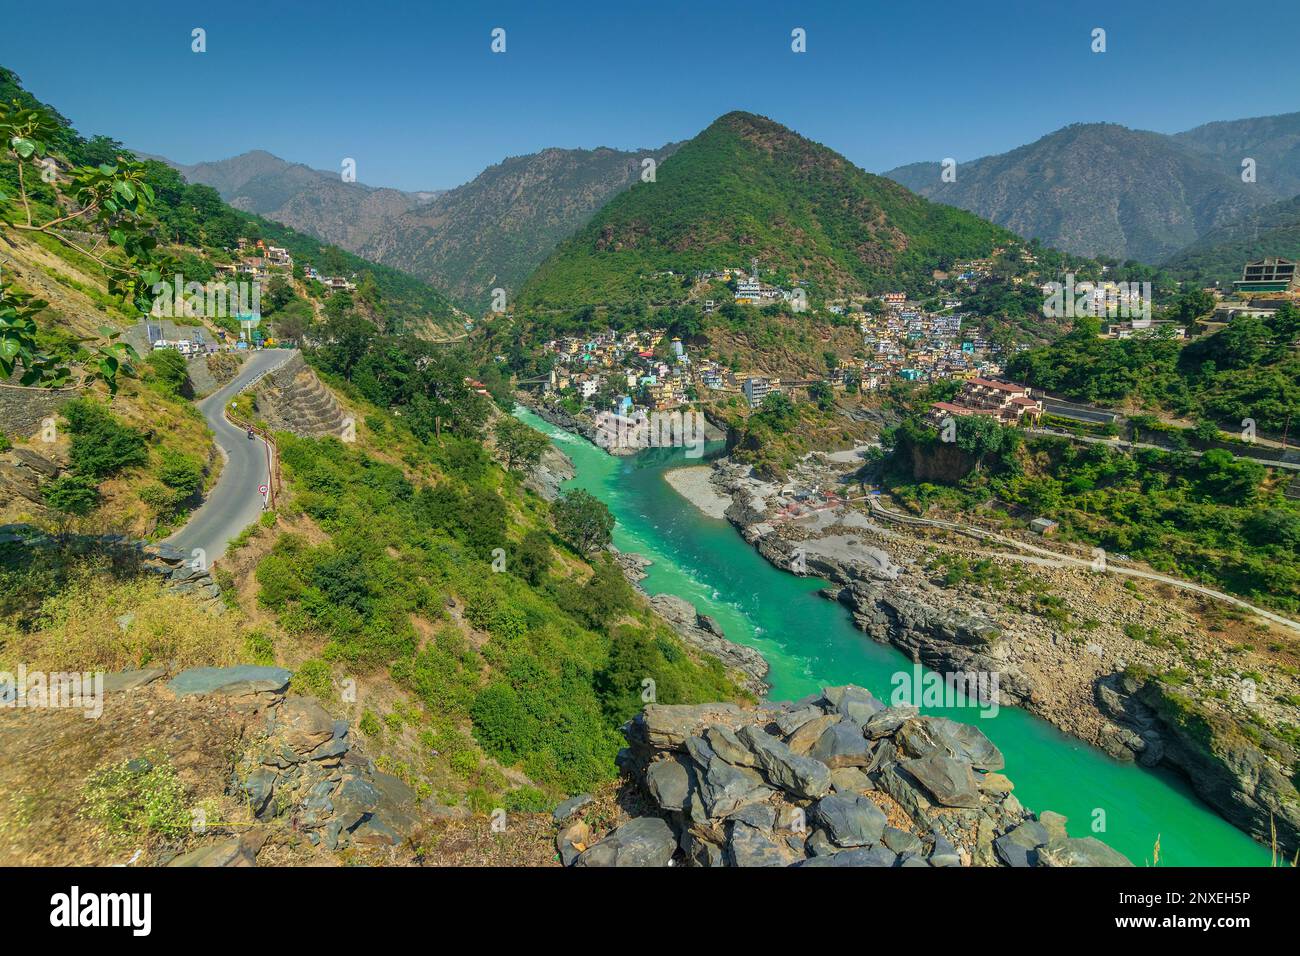 Strada curva a Devprayag, Godly Confluence, Garhwal, Uttarakhand, India. Qui Alaknanda incontra il fiume Bhagirathi e forma il fiume Gange. India. Foto Stock